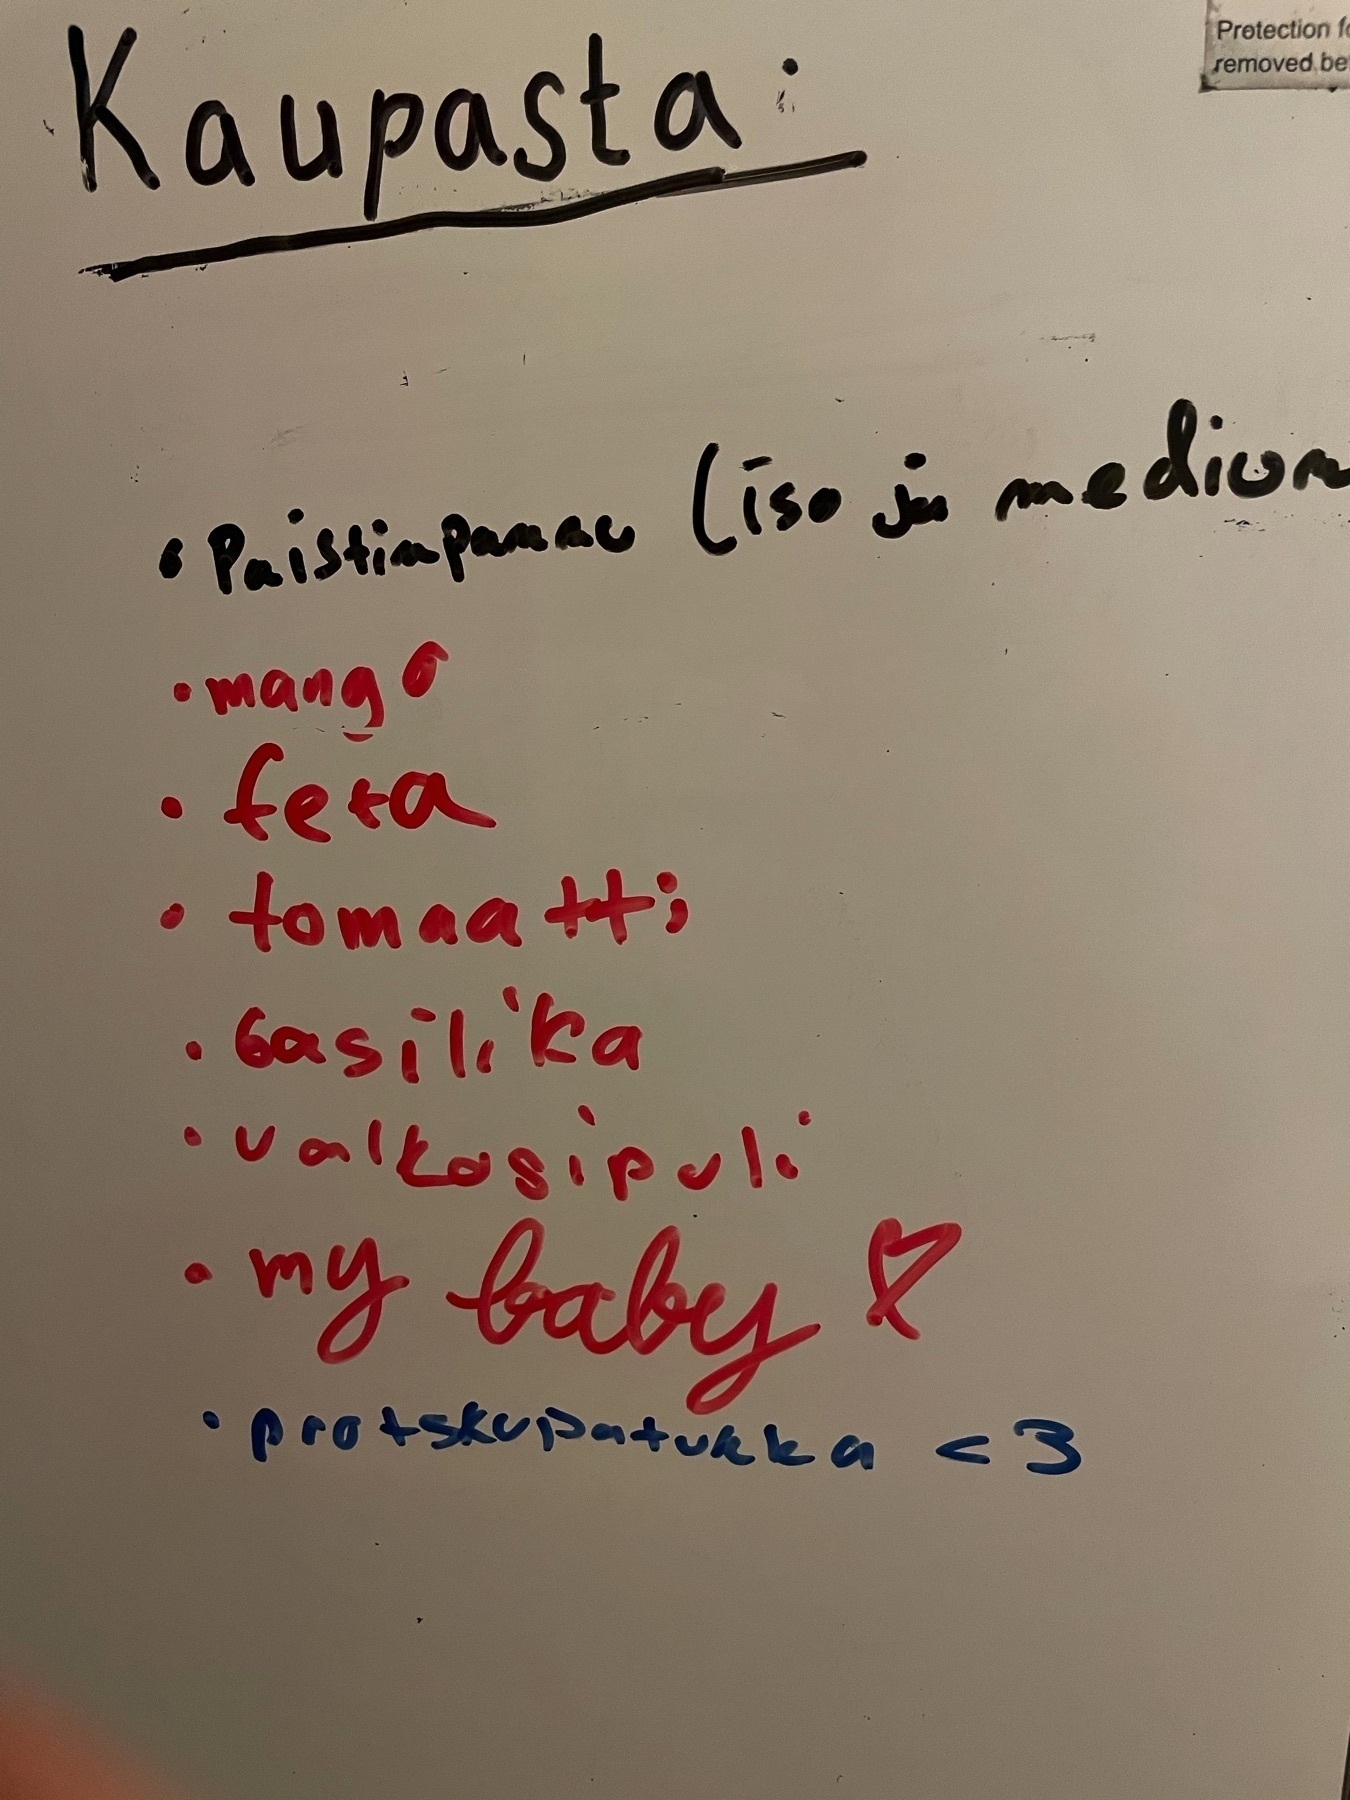 shopping list in Finnish on a white board: mango, feta, tomaatti, basilika etc.